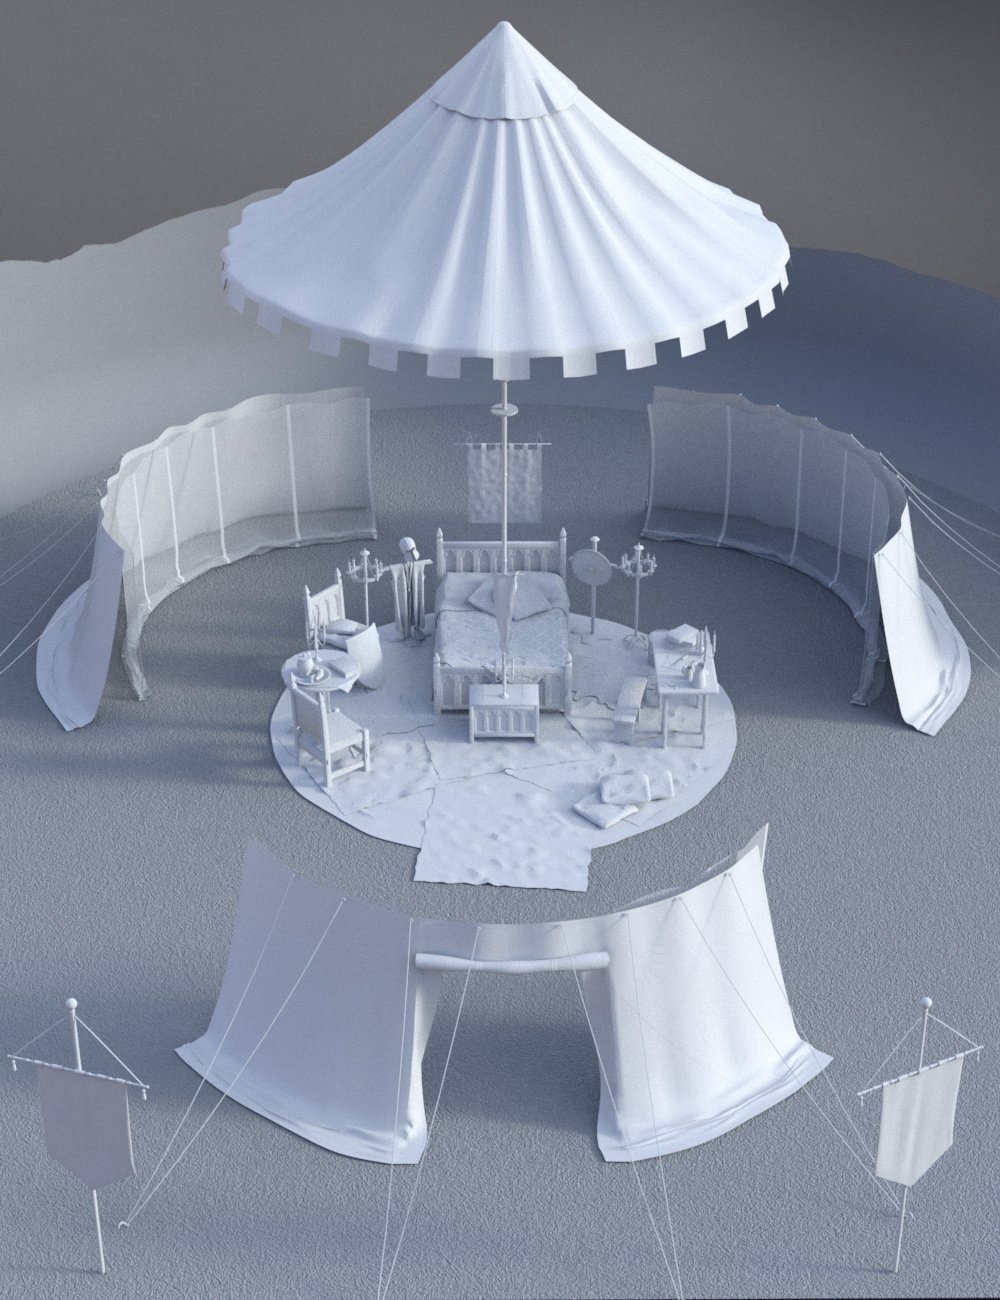 Knights Pavilion by: Merlin Studios, 3D Models by Daz 3D